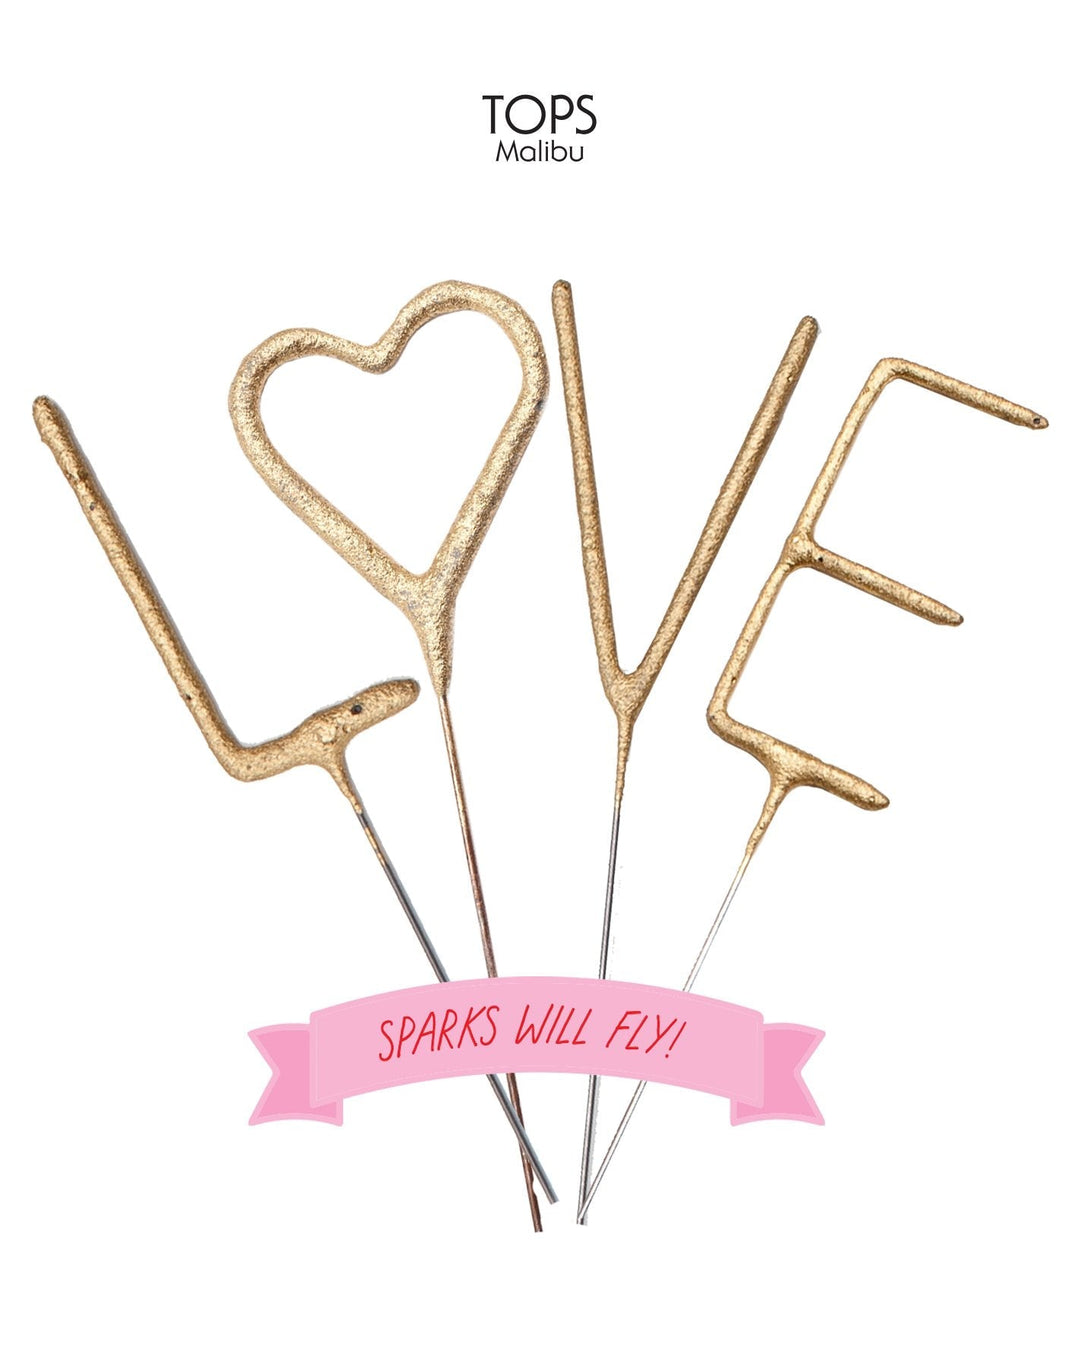 LOVE SPARKLER TOPS Malibu Sparkler Bonjour Fete - Party Supplies